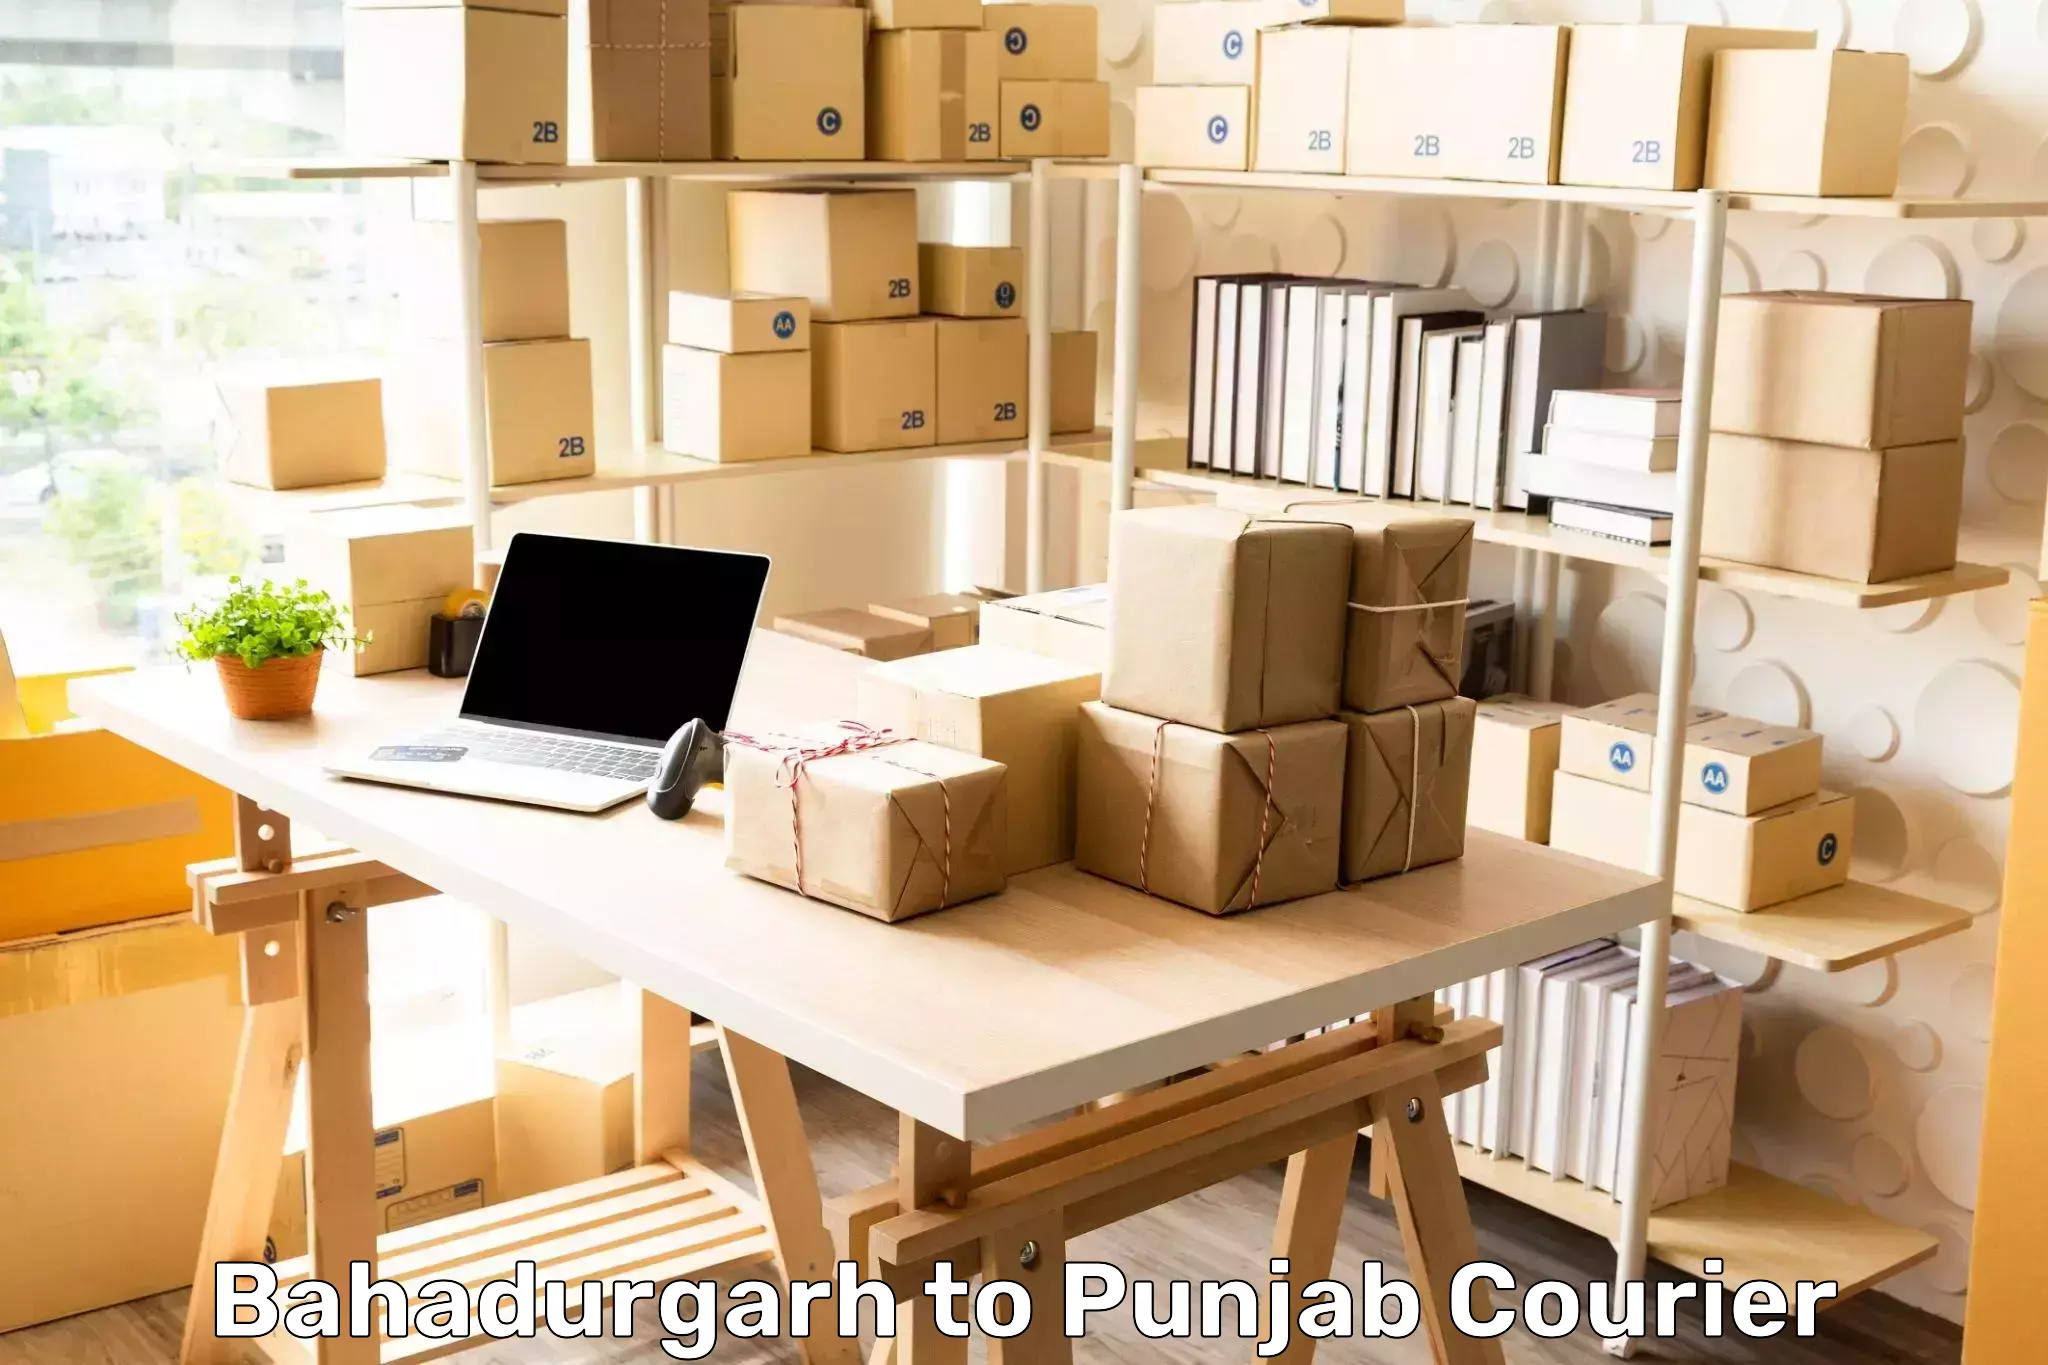 Multi-service courier options Bahadurgarh to Punjab